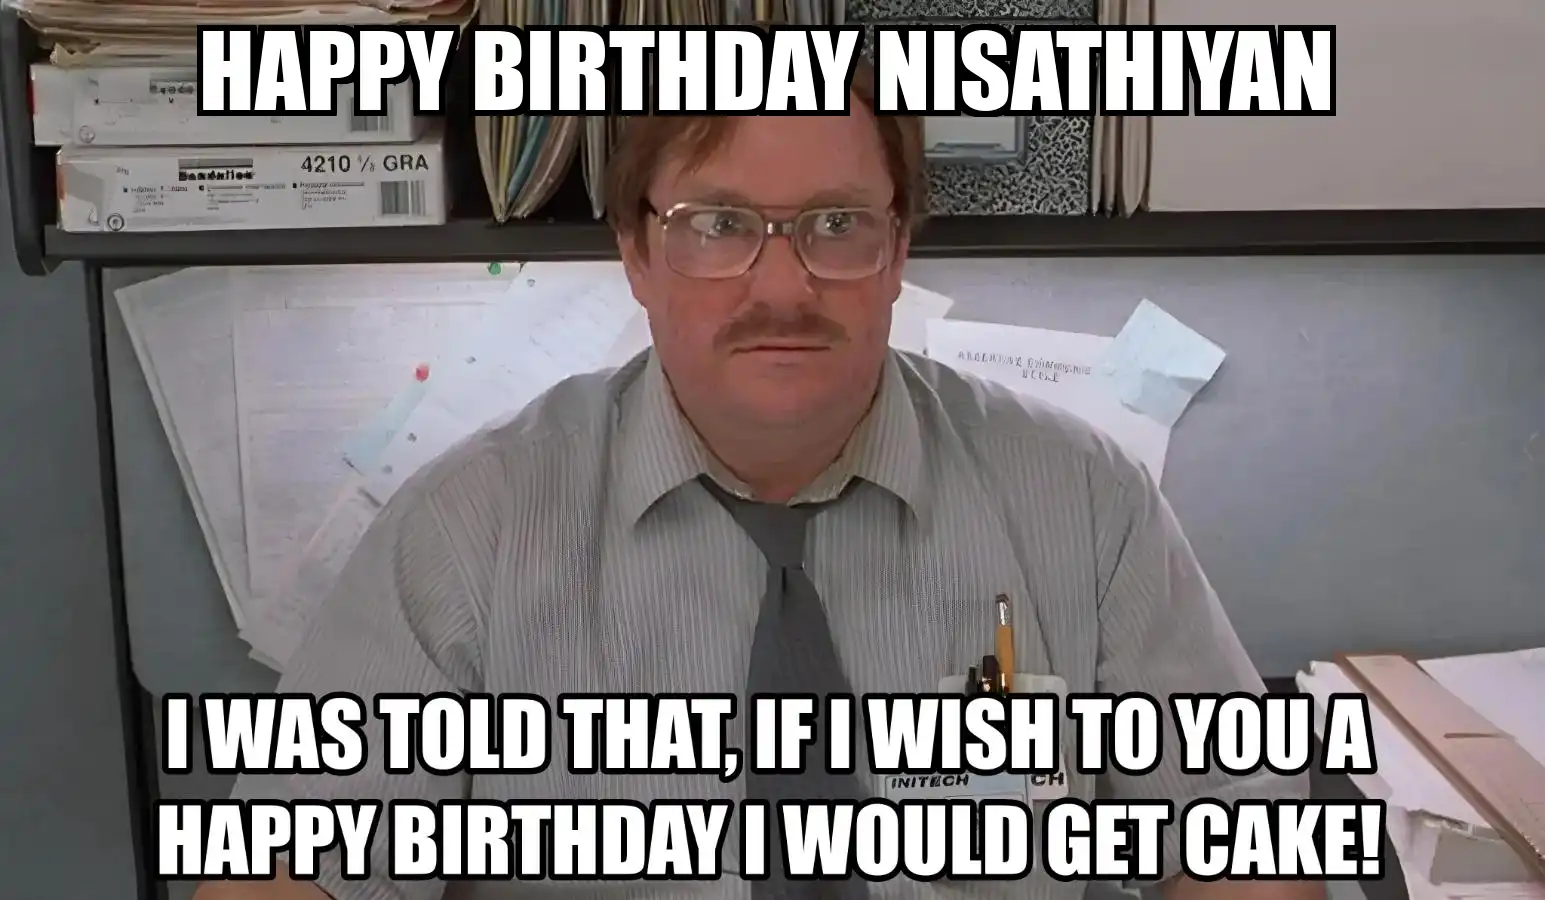 Happy Birthday Nisathiyan I Would Get A Cake Meme